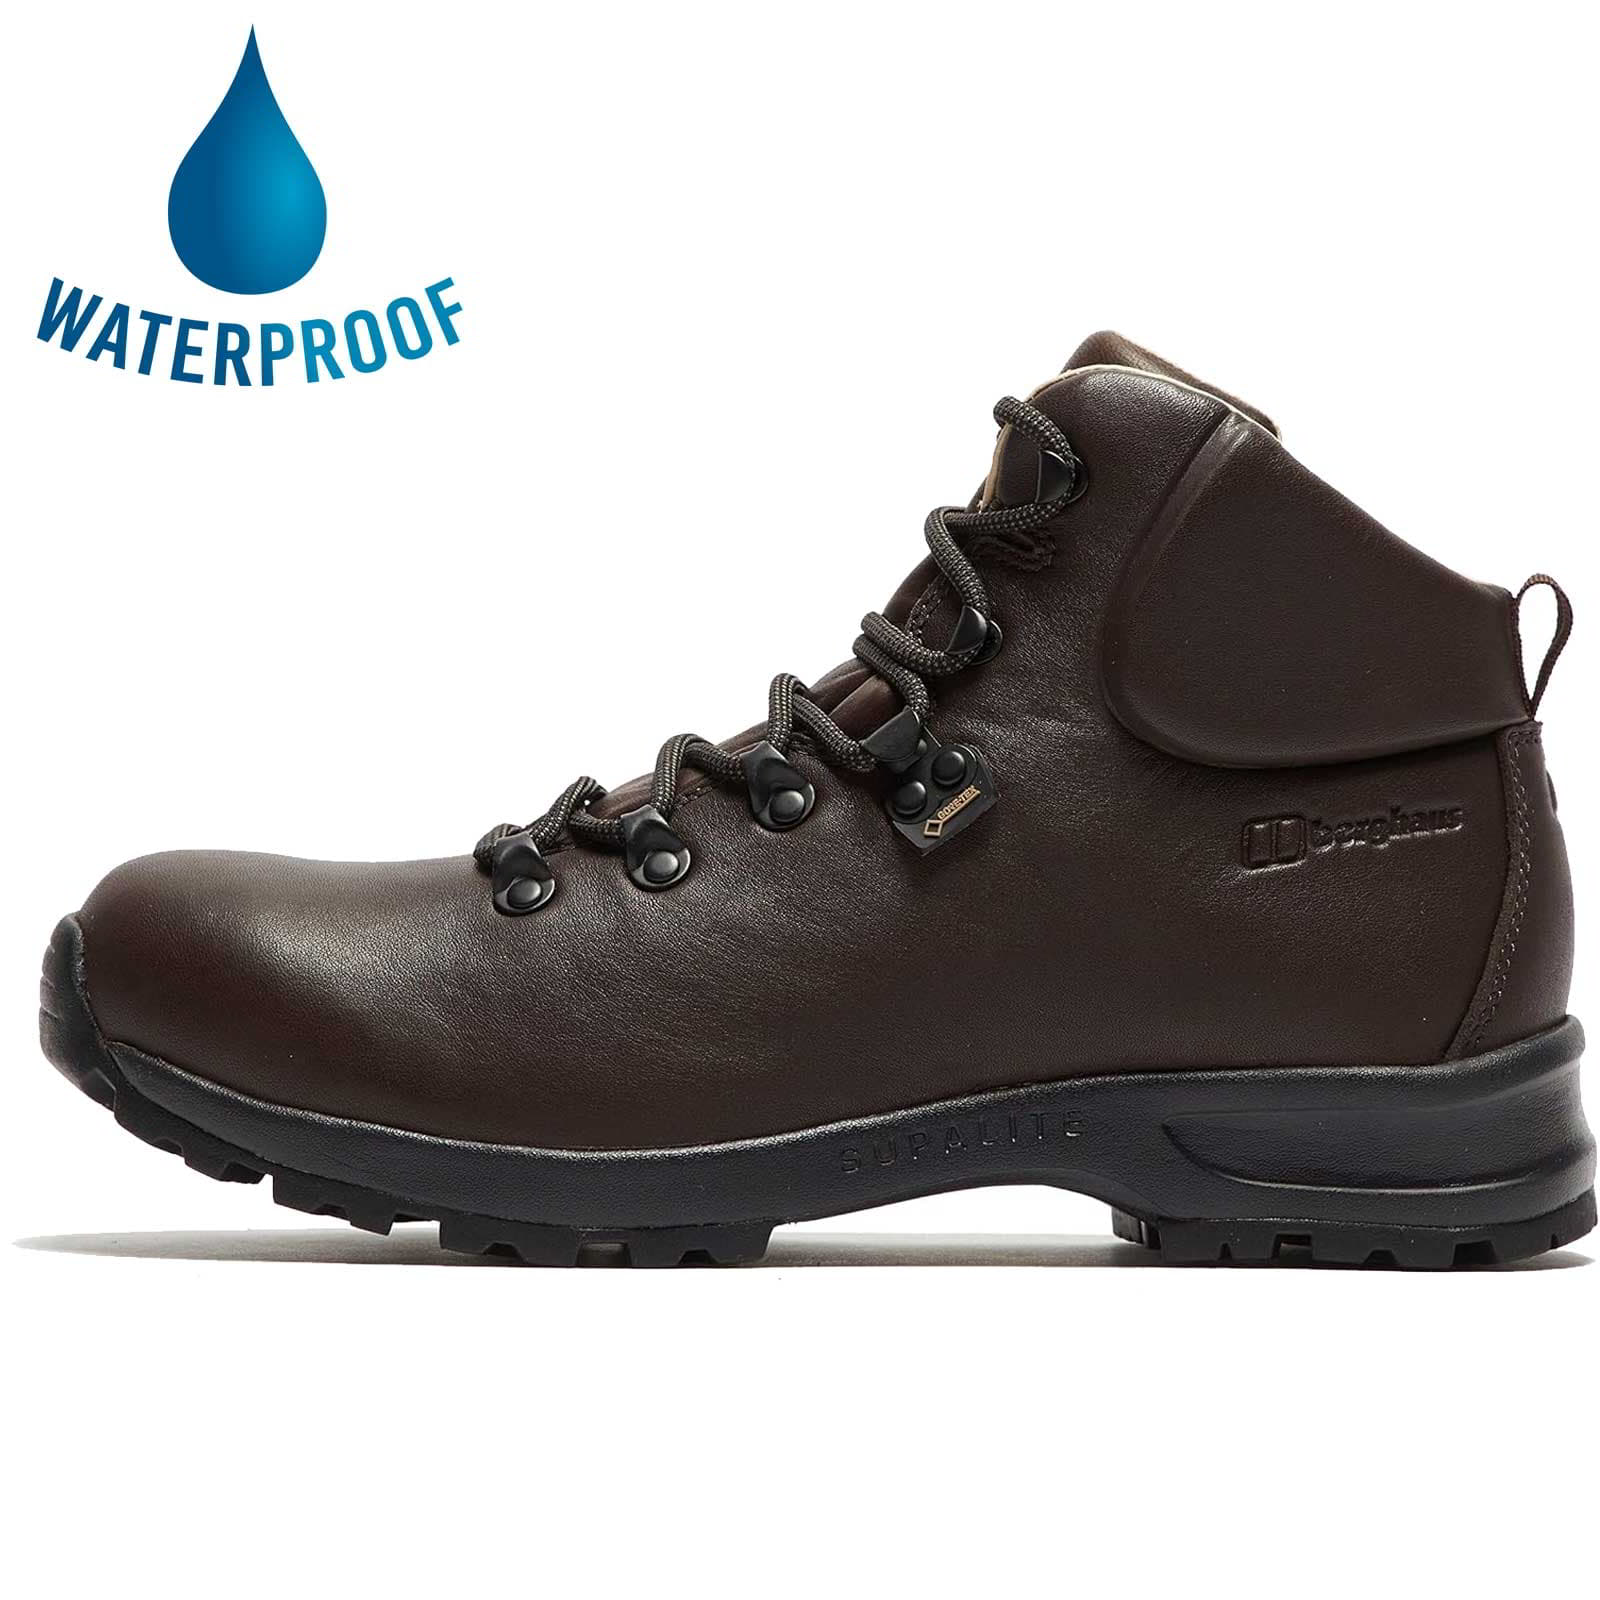 Brasher by Berghaus Men's Supalite II GTX Waterproof Boots - Brown